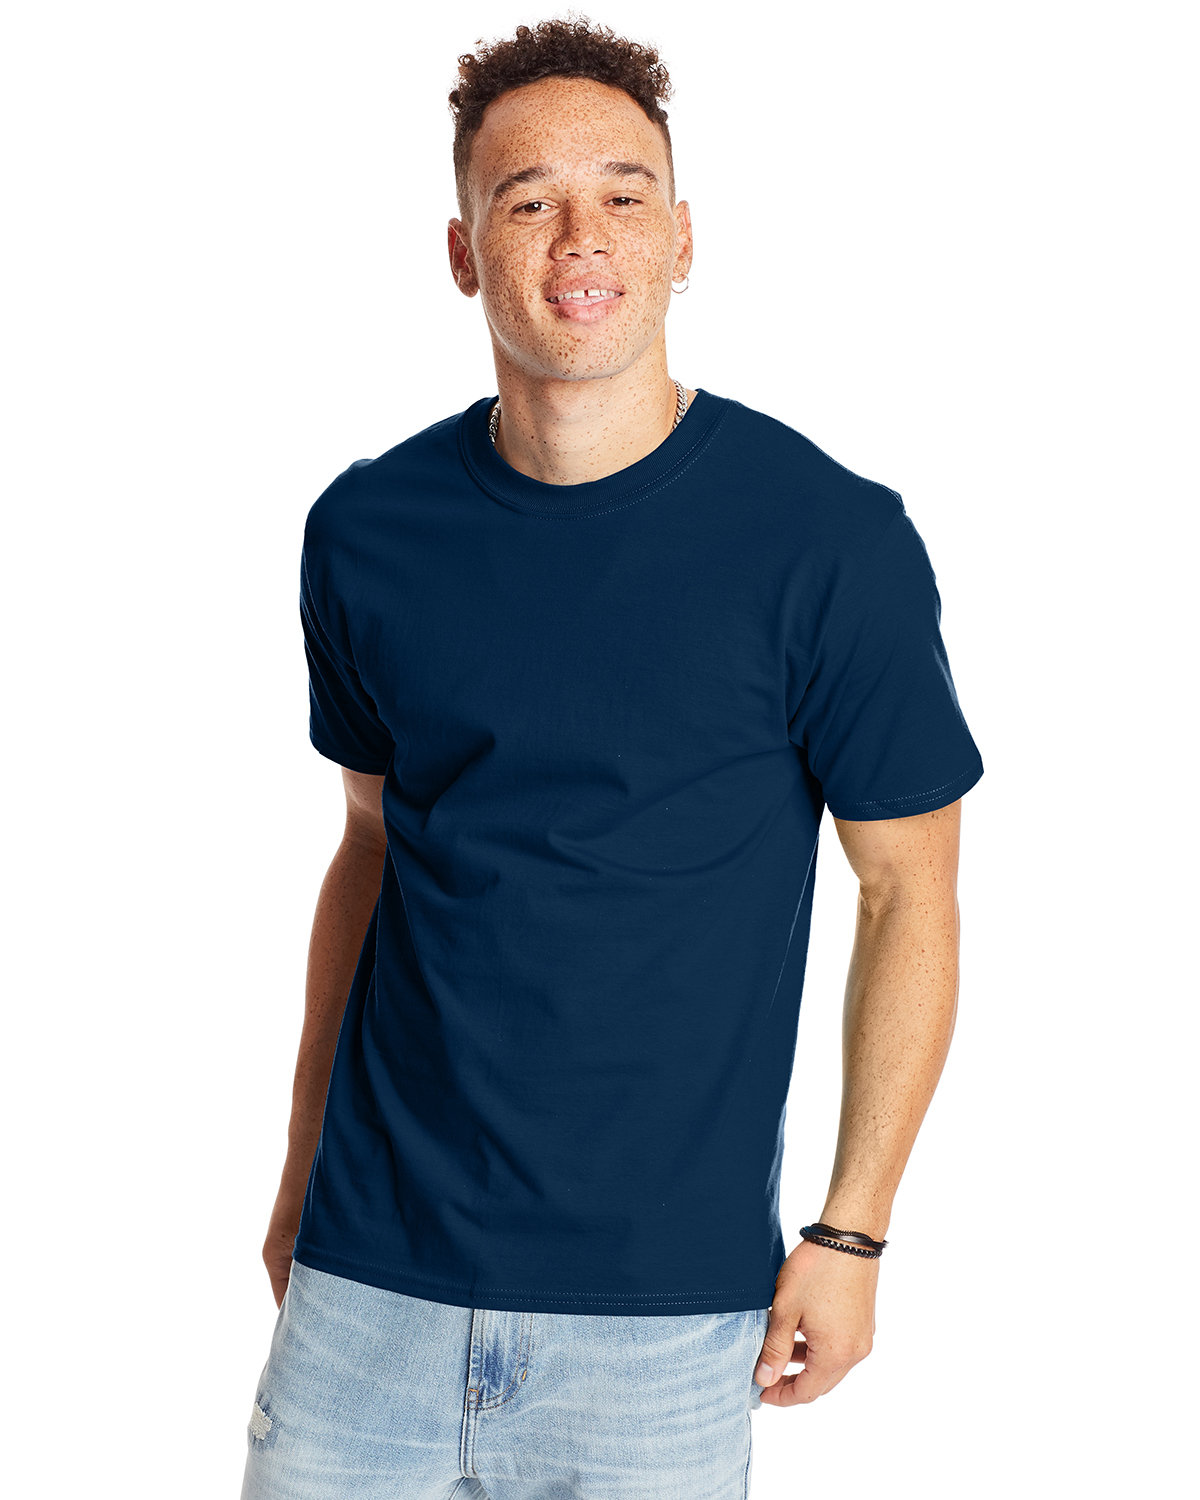 Hanes 5180 Beefy-T 100% Cotton Short Sleeve Unisex T-Shirt